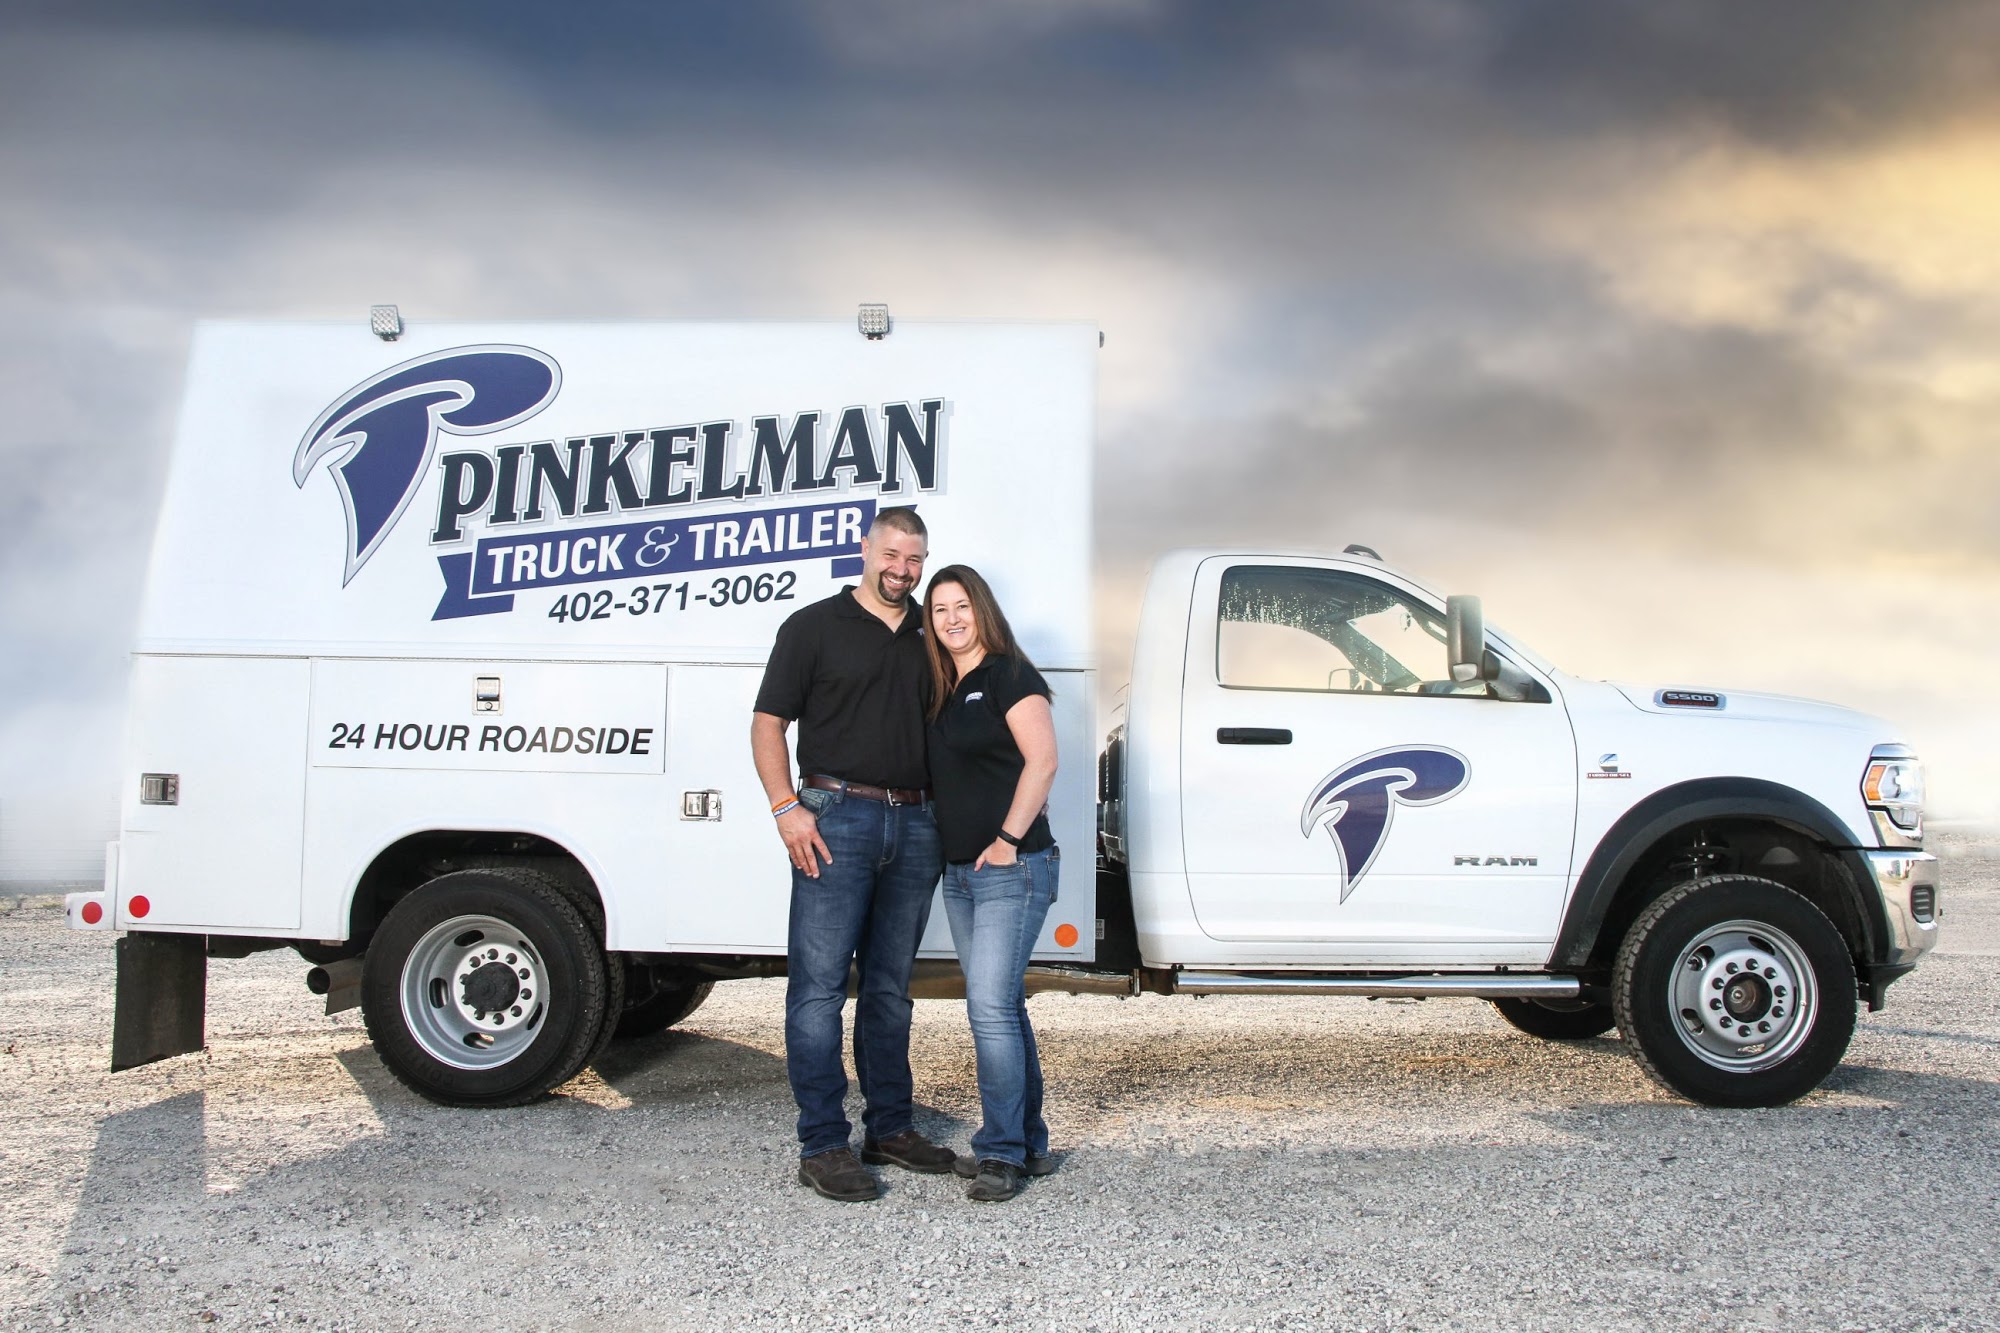 Pinkelman Truck & Trailer